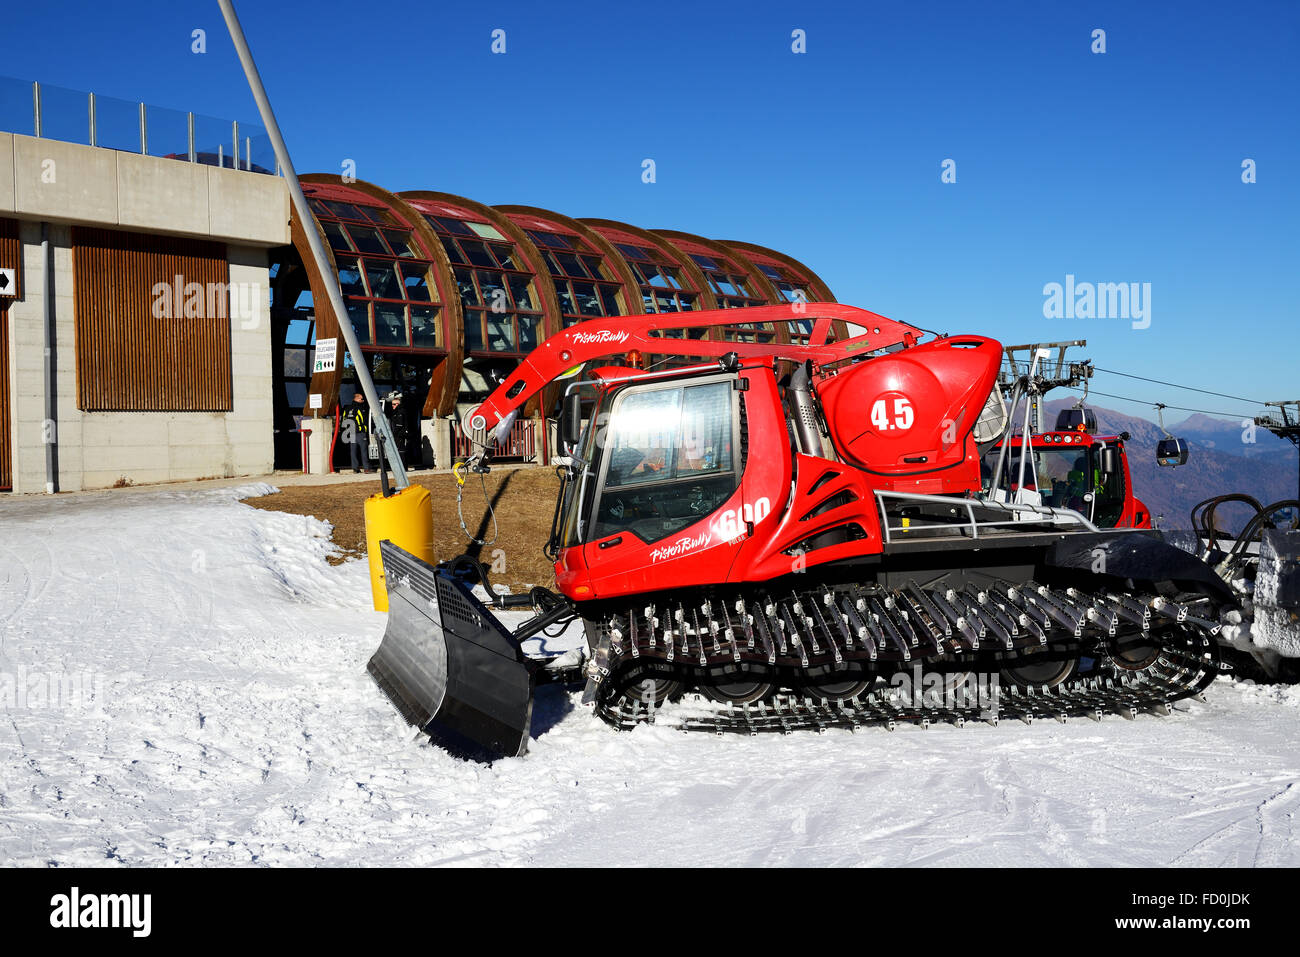 The Pisten Bully 600 groomer for ski slopes preparation, Madonna di Campiglio, Italy Stock Photo